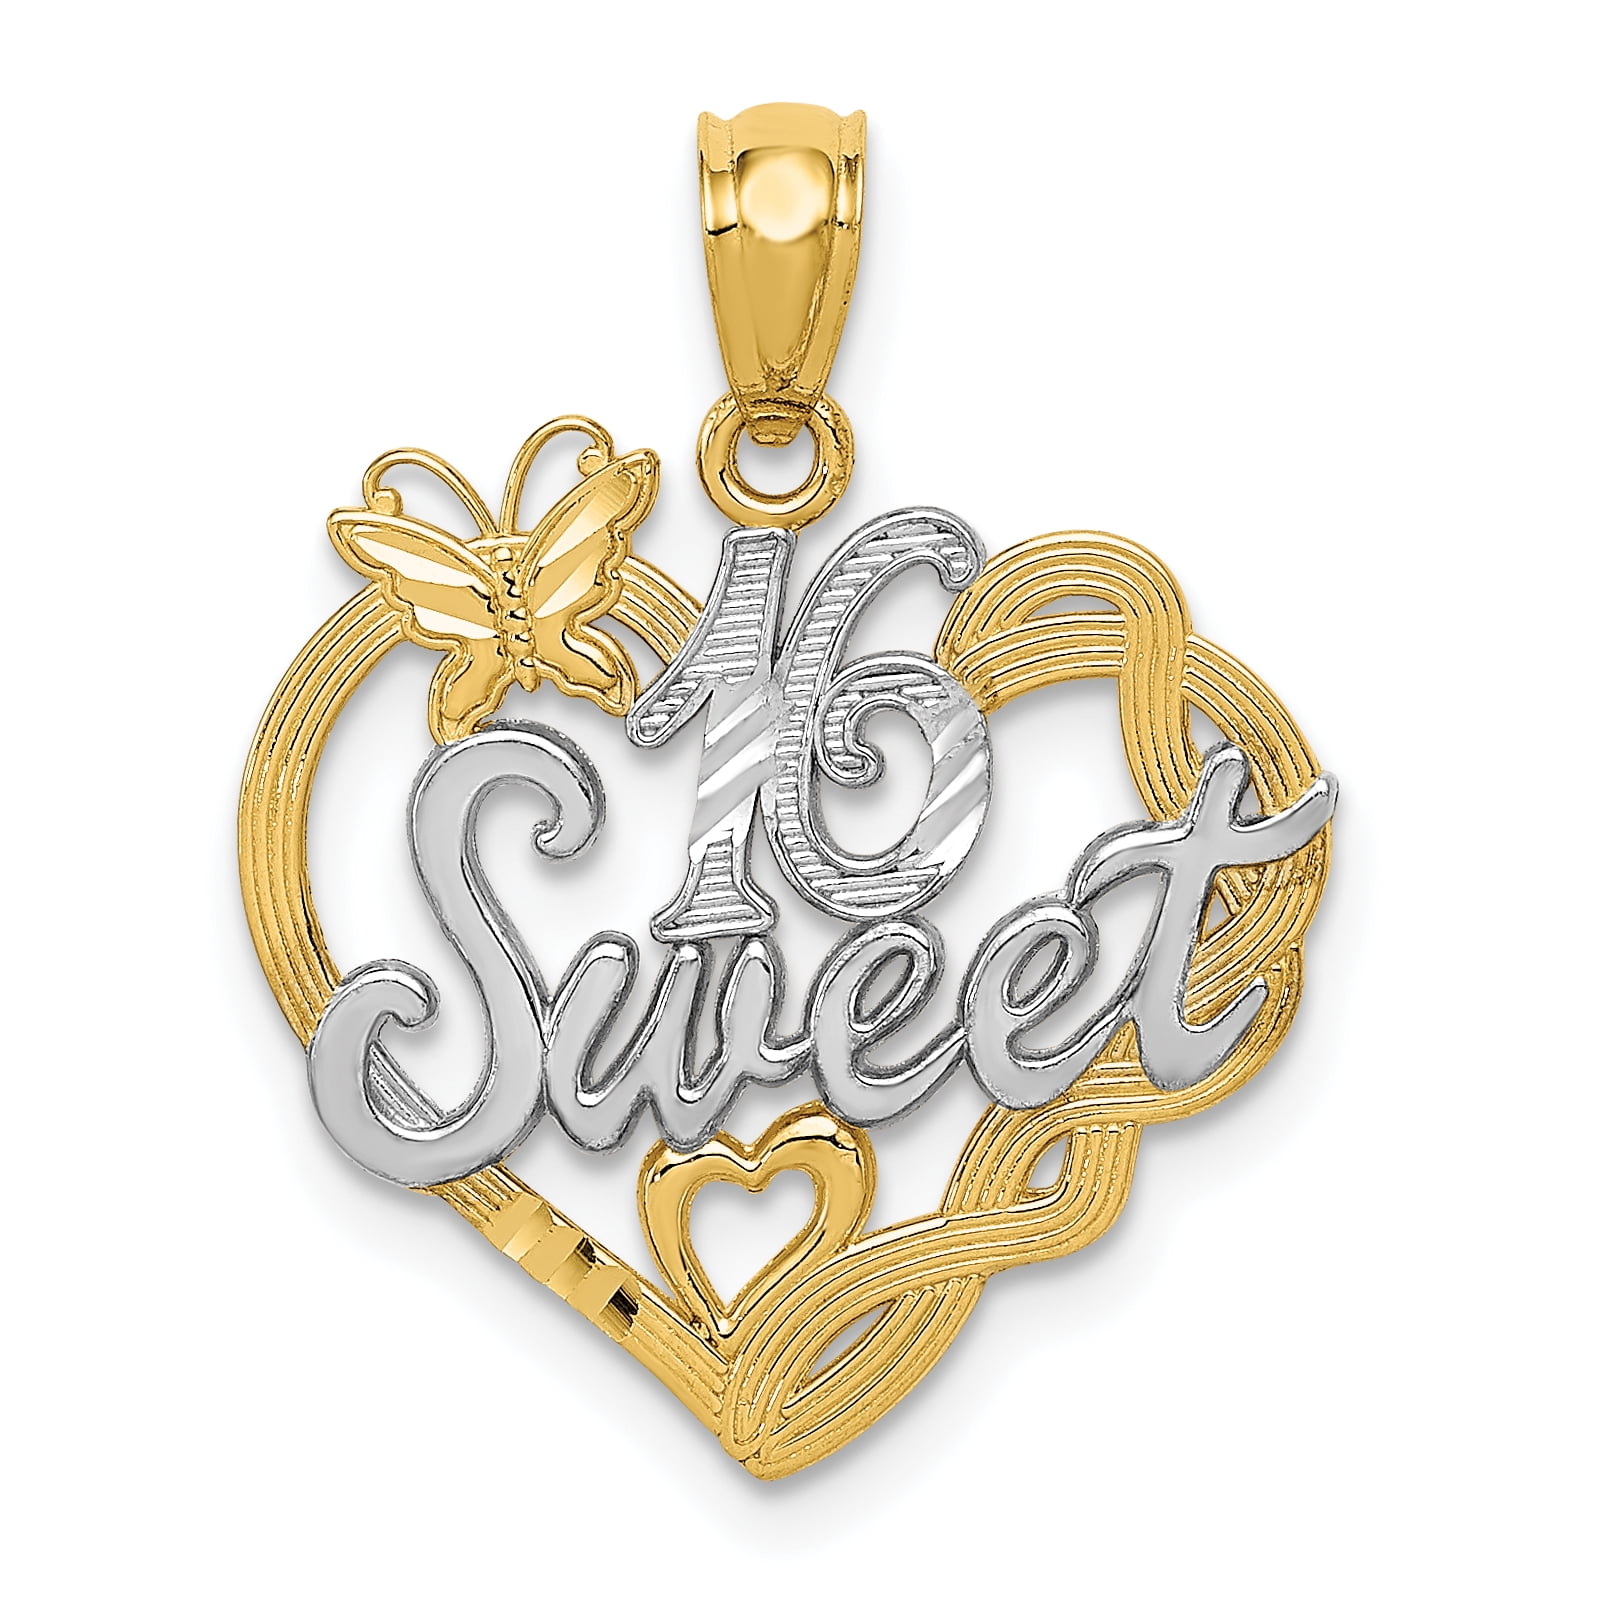 Sweet 16 Floating Charms | Sweet Sixteen Living Lockets | Memory Locket Supplies | Shaker Charm DIY | Birthday Gift Ideas (2pcs / 8mm x 6mm)